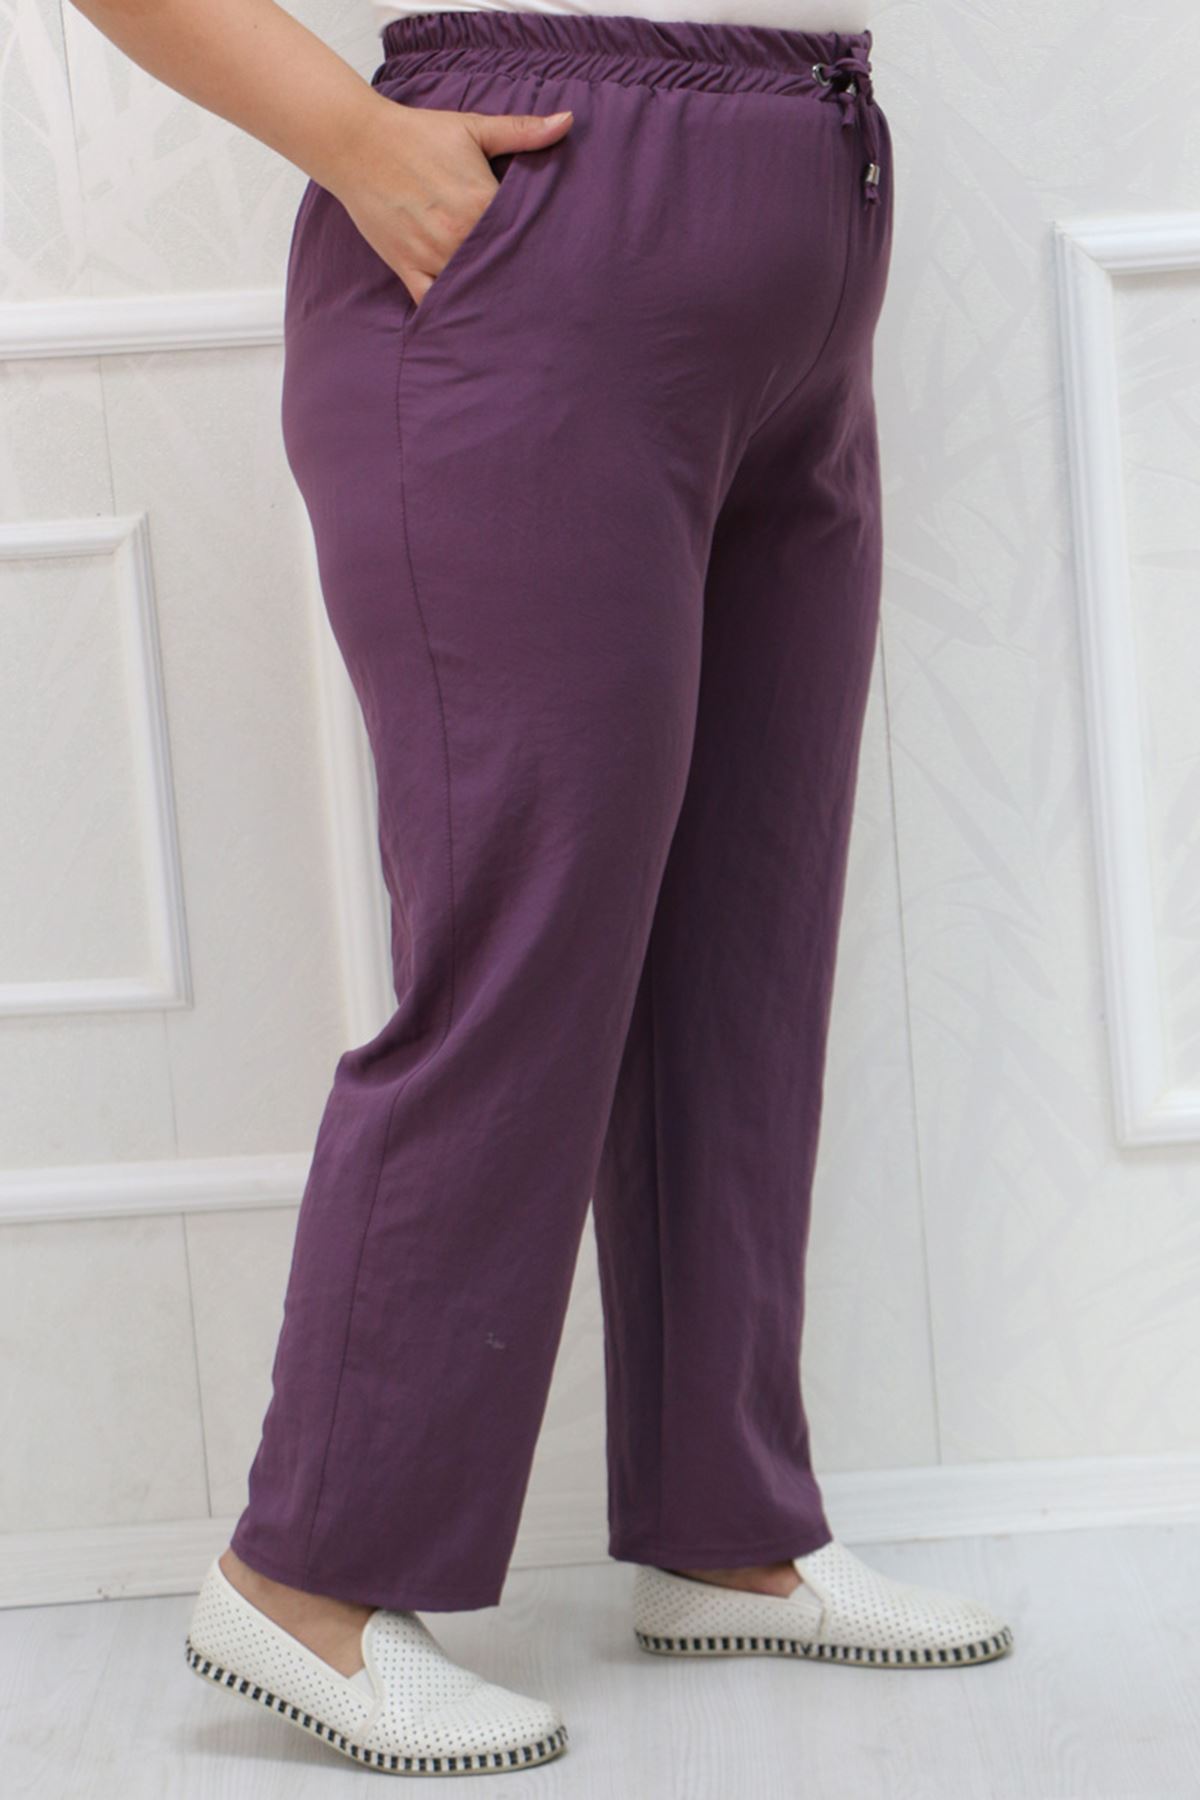 39024 Large Size Star Airobin Slim Leg Pants With Elastic Waist -Lilac